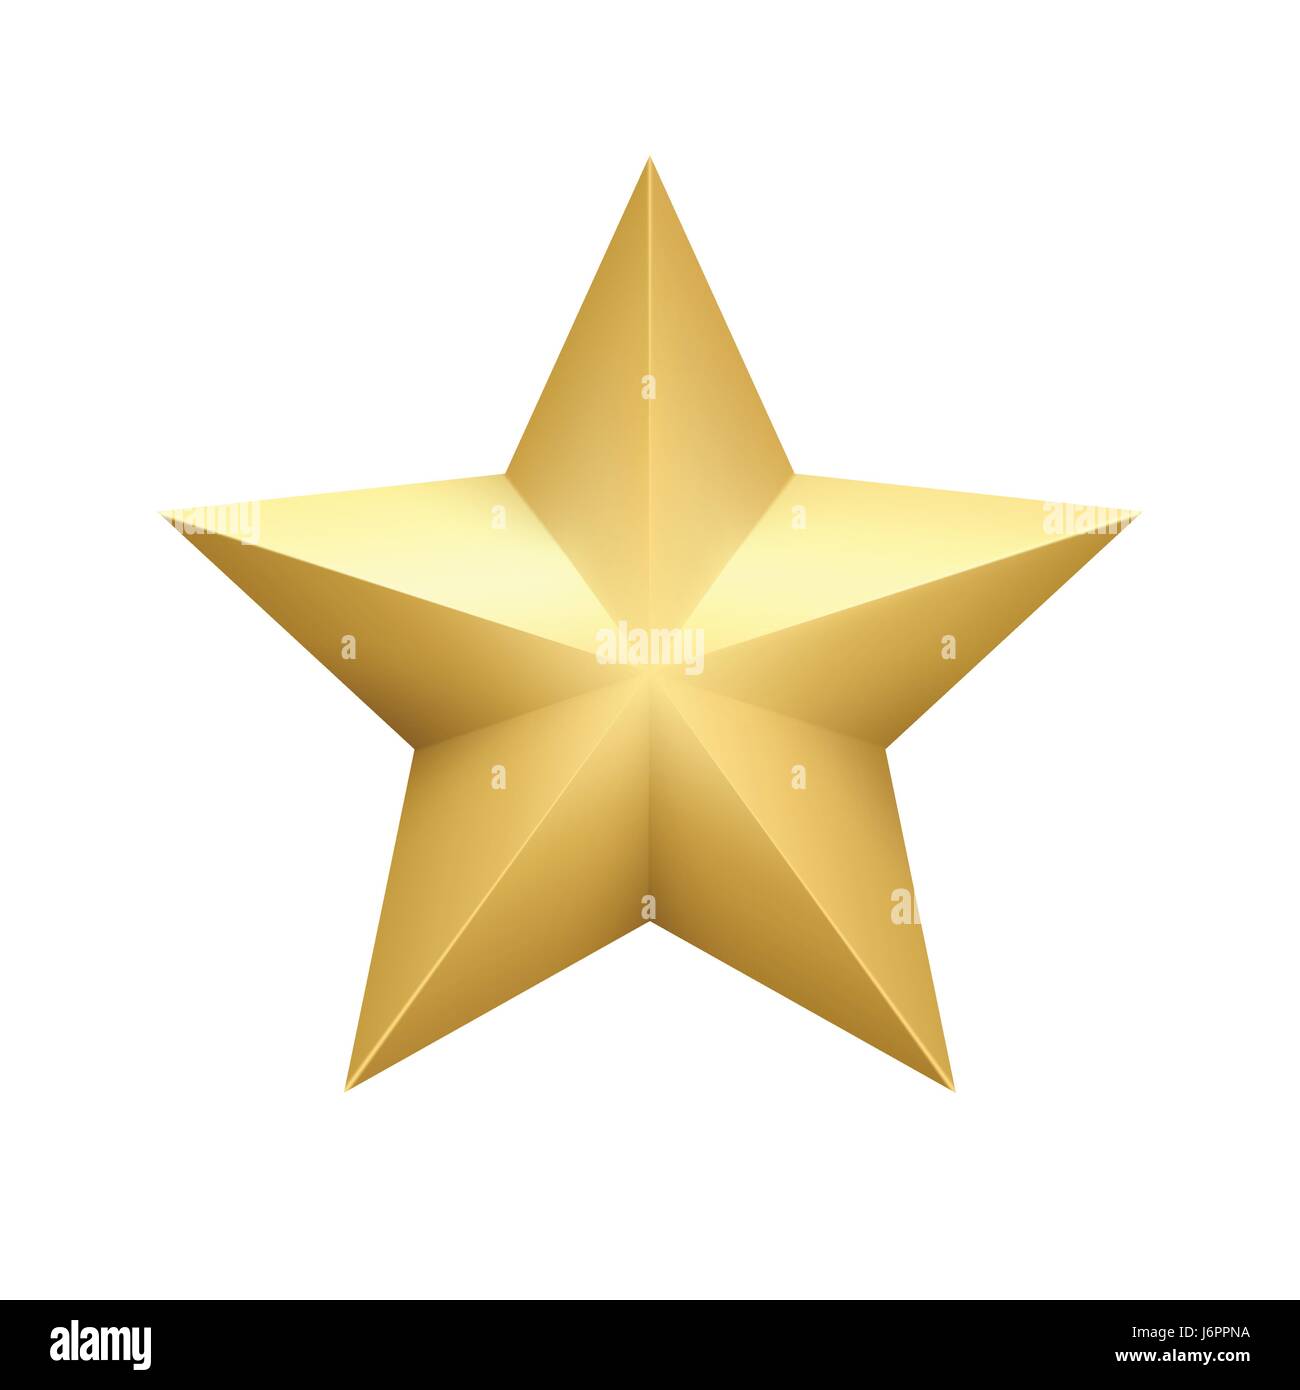 Realistic metallic golden star isolated on white background. Vector illustration Stock Vector